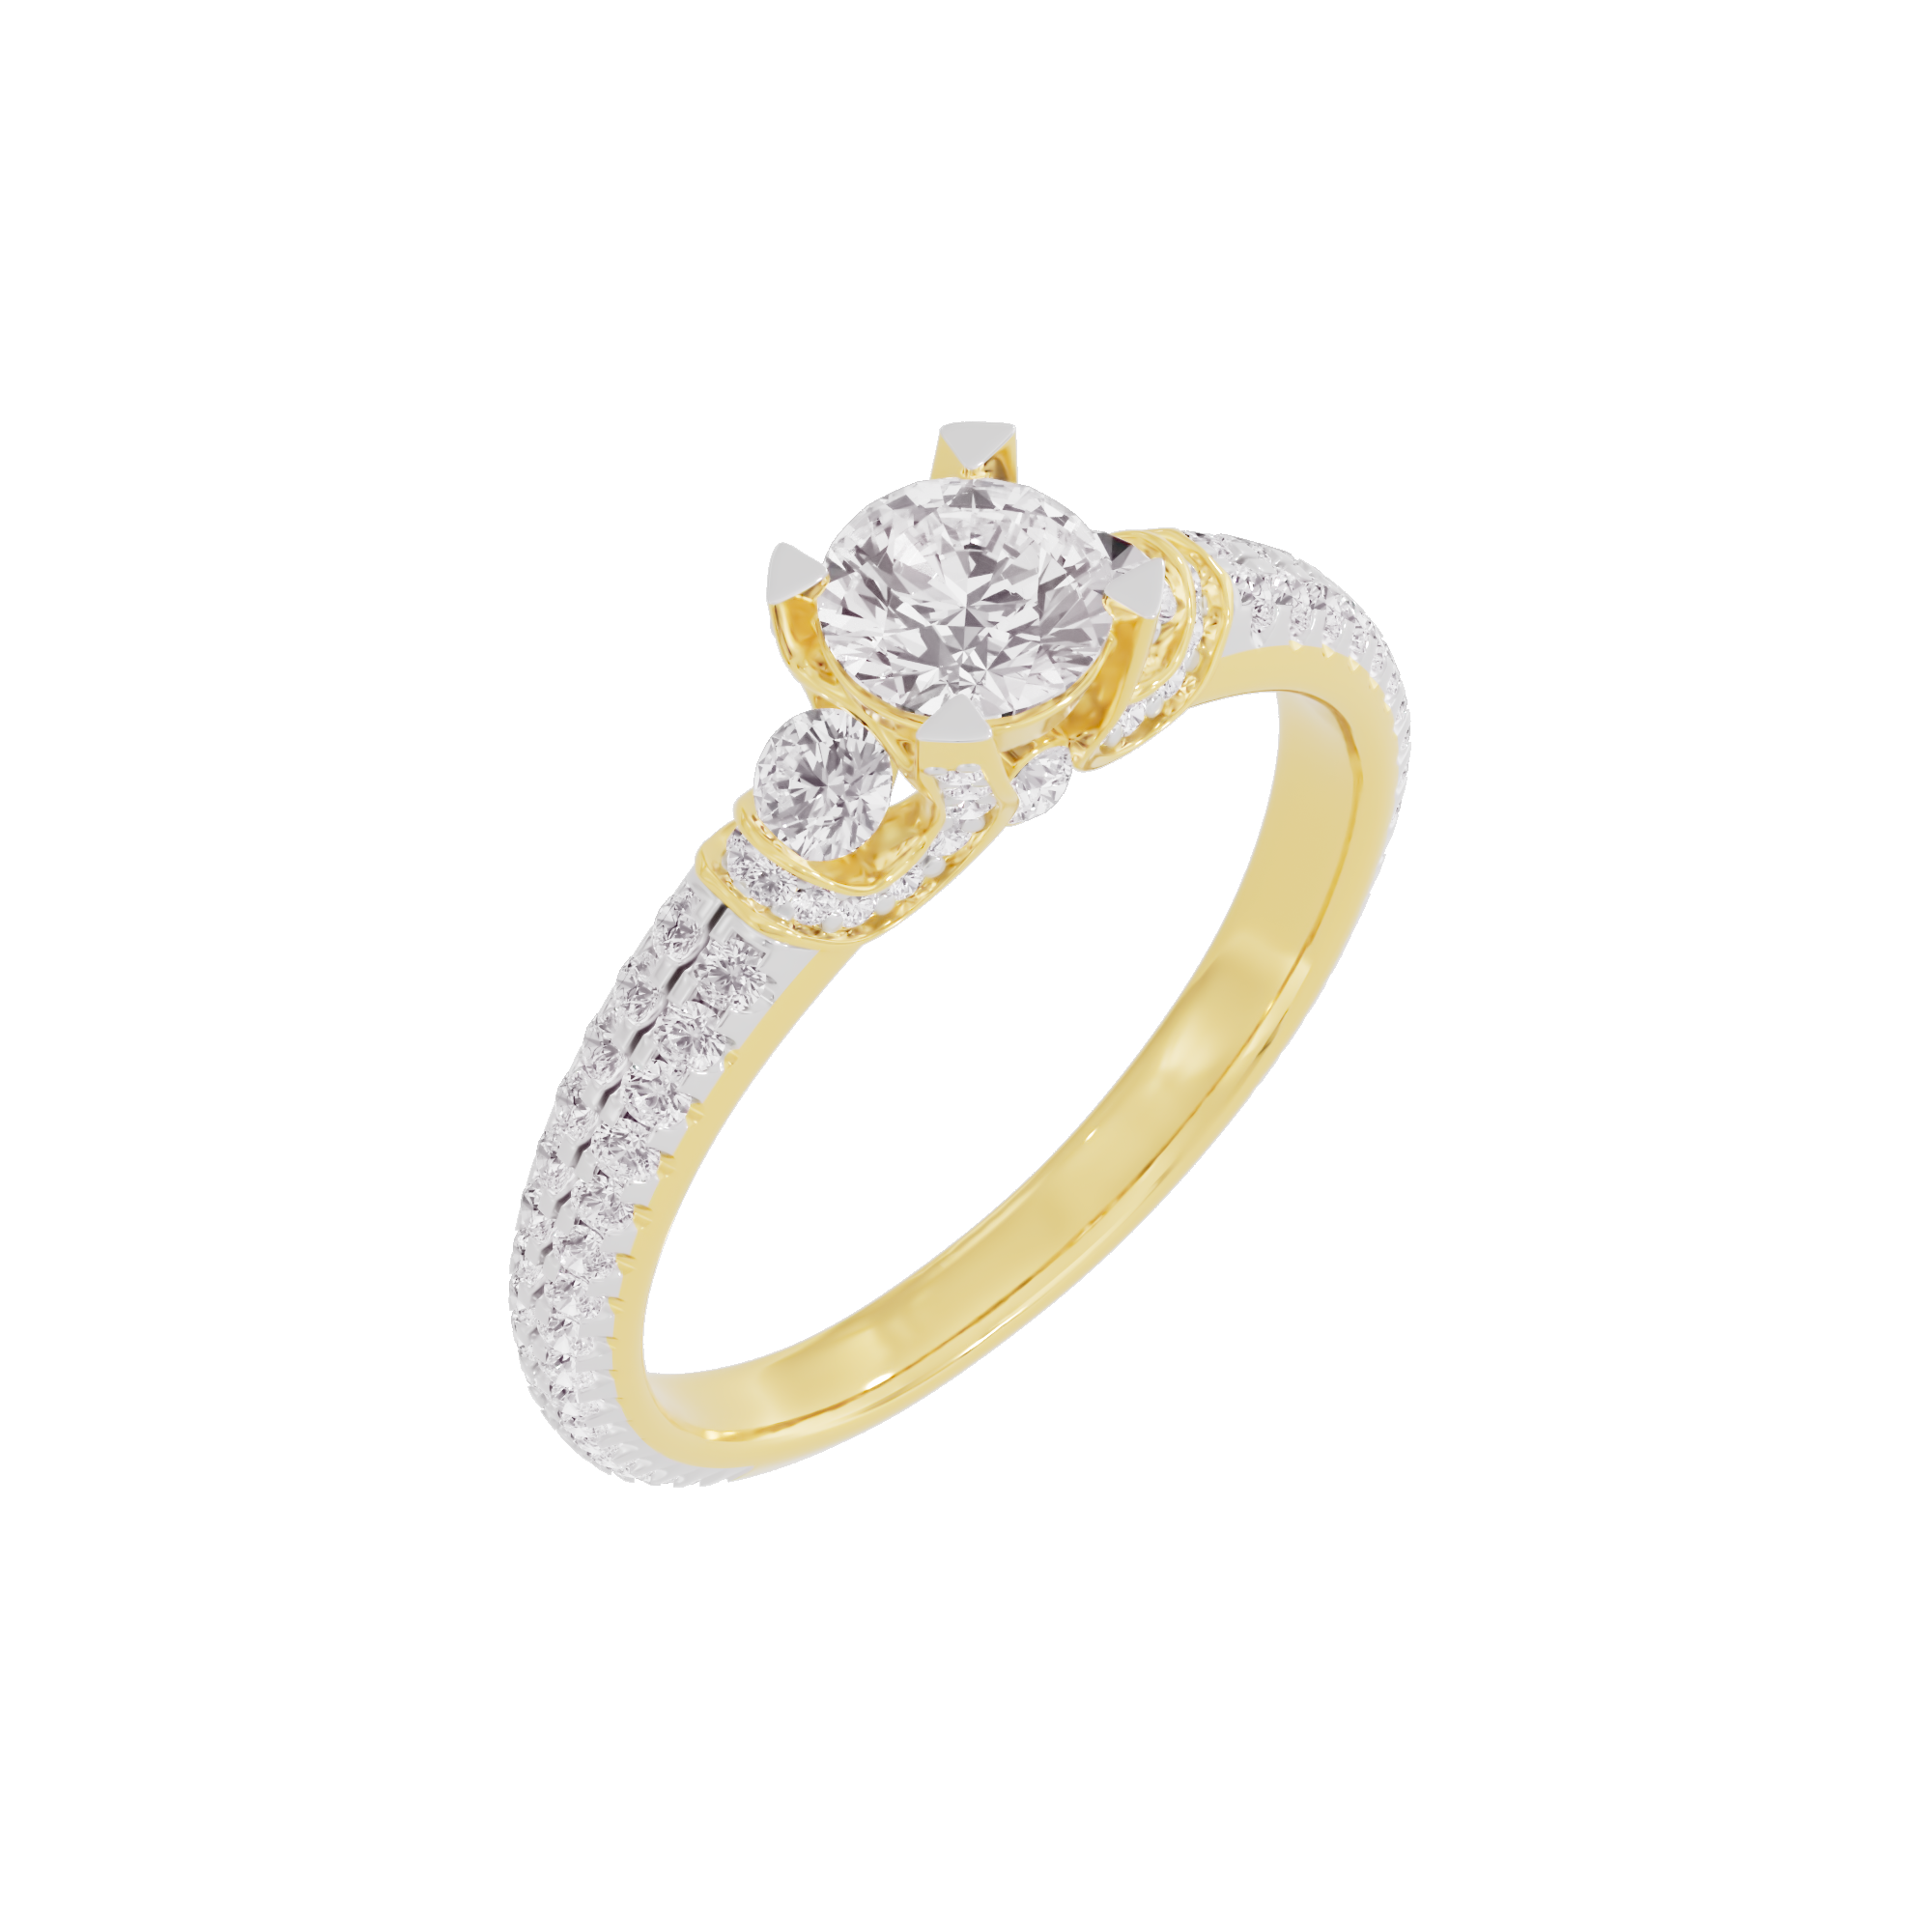 Luxe Delicate Diamond Ring